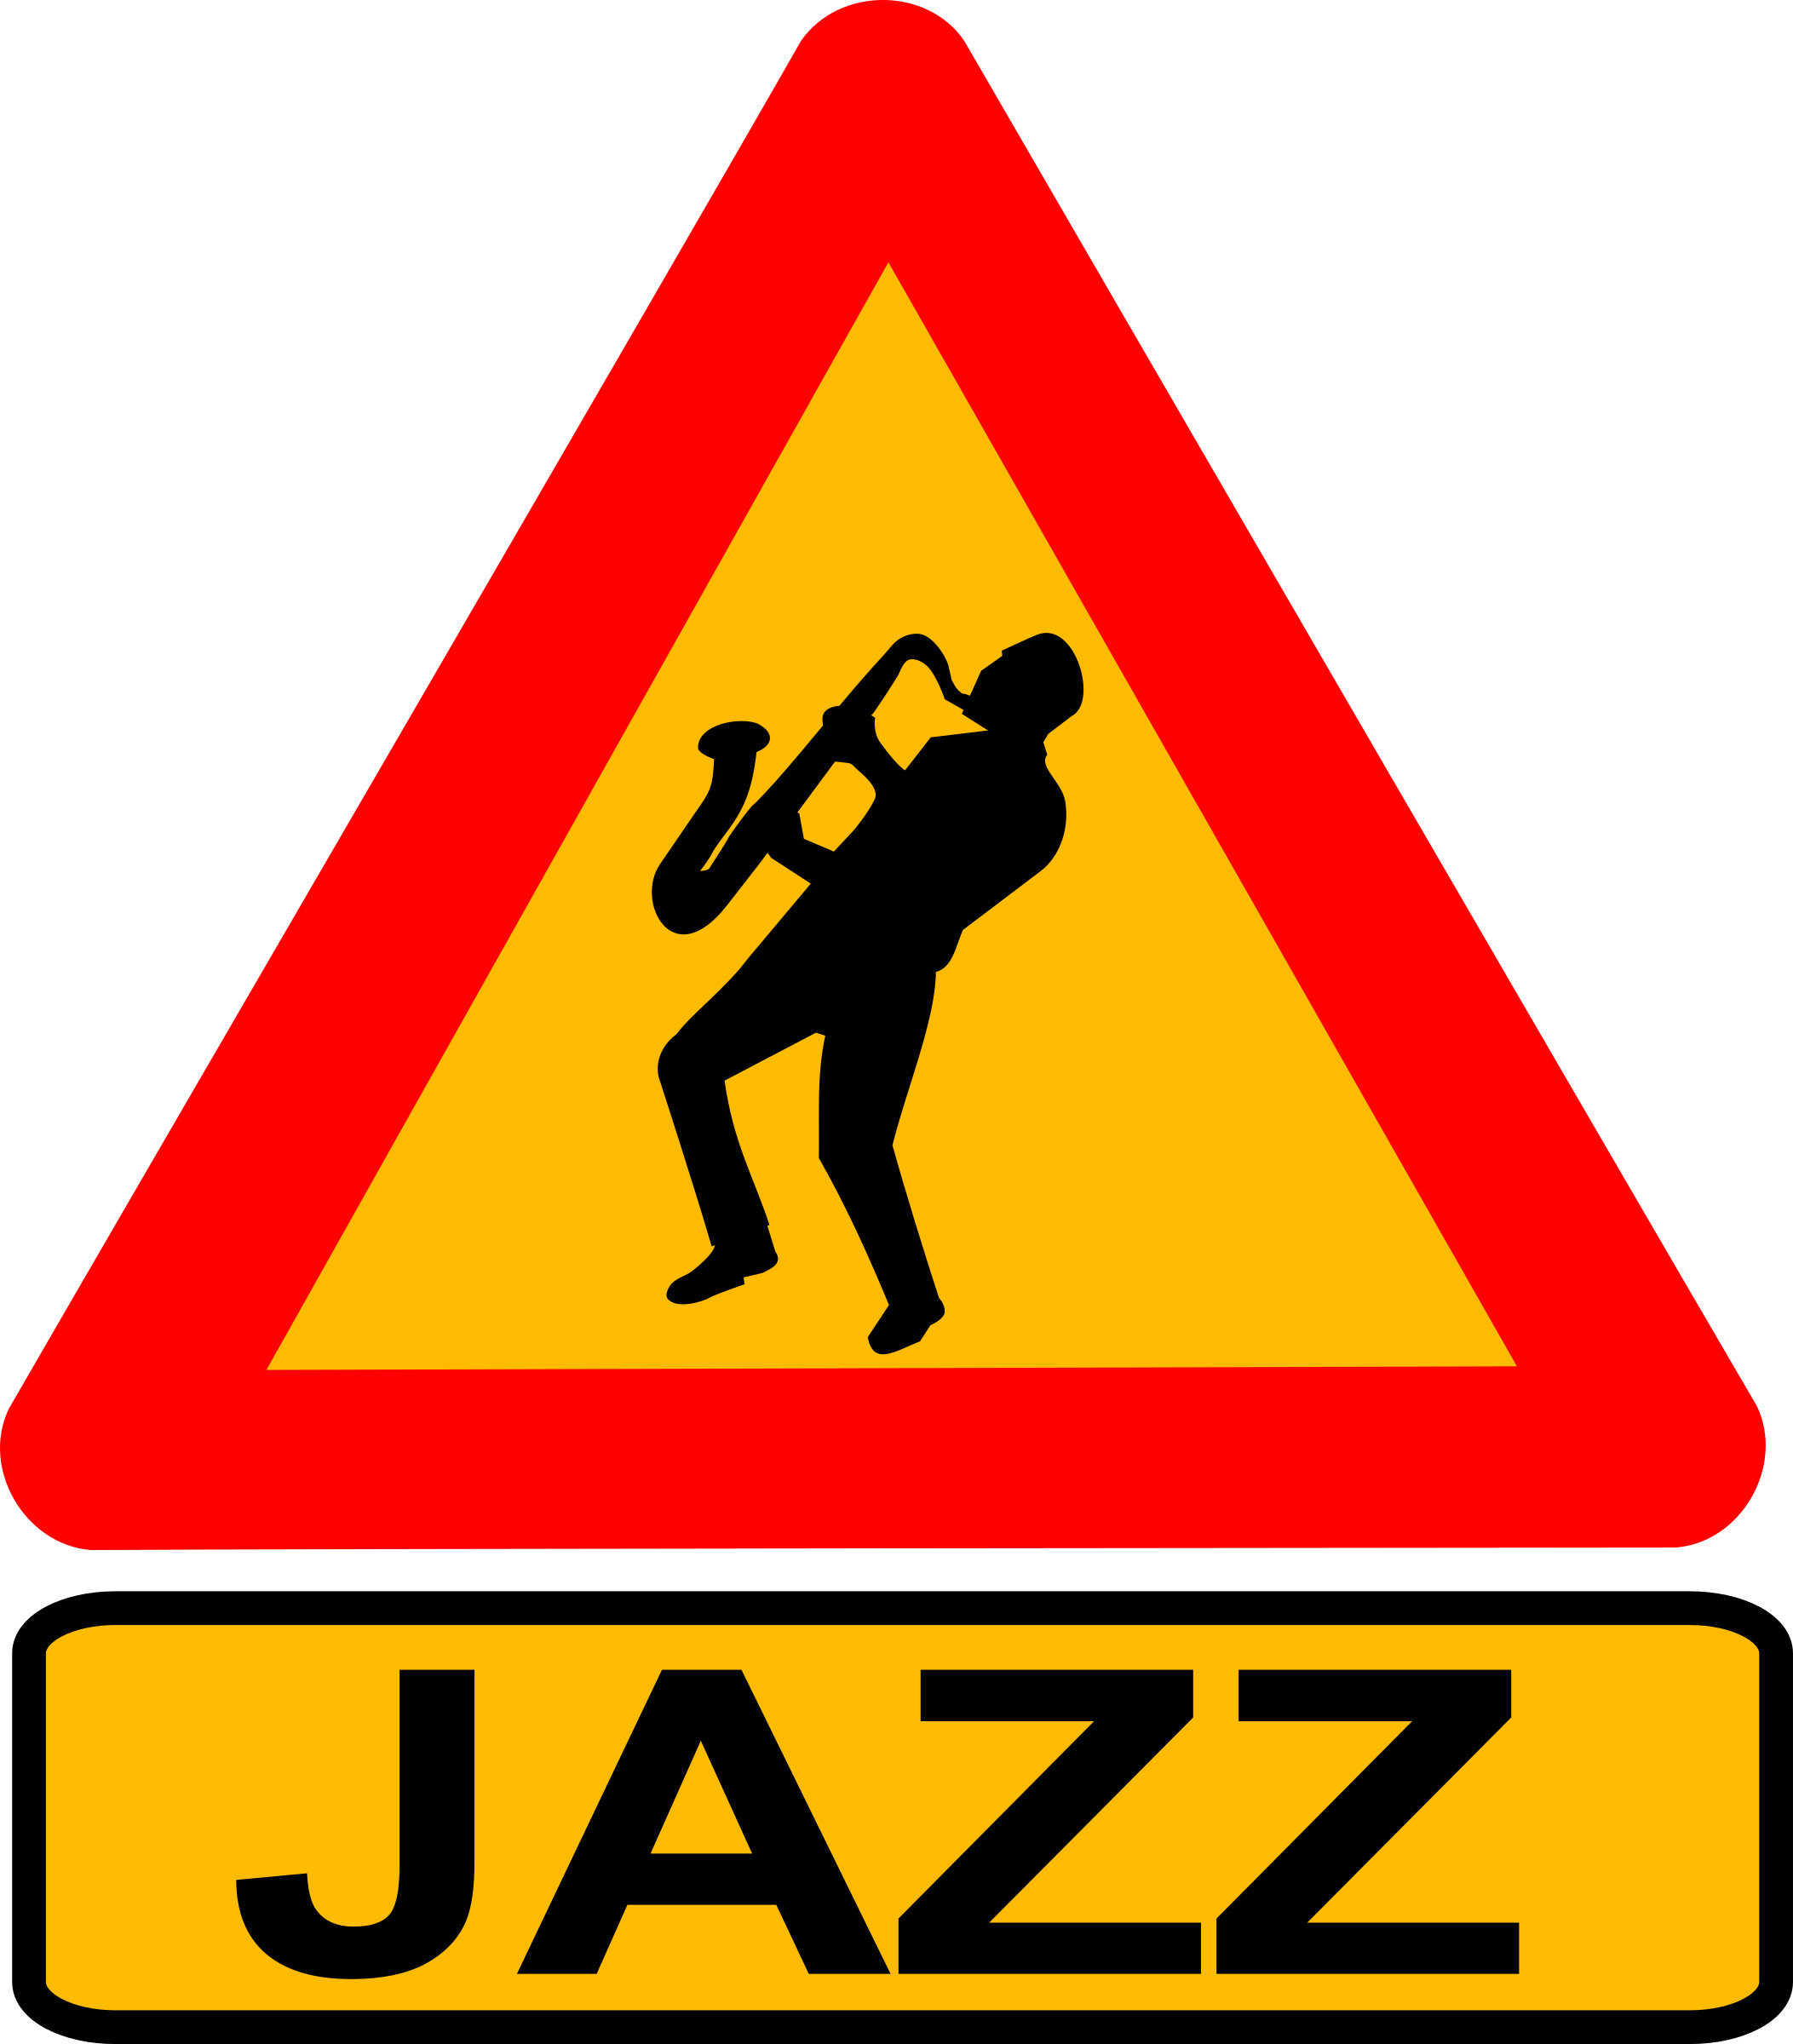 Clipart - Caution jazz